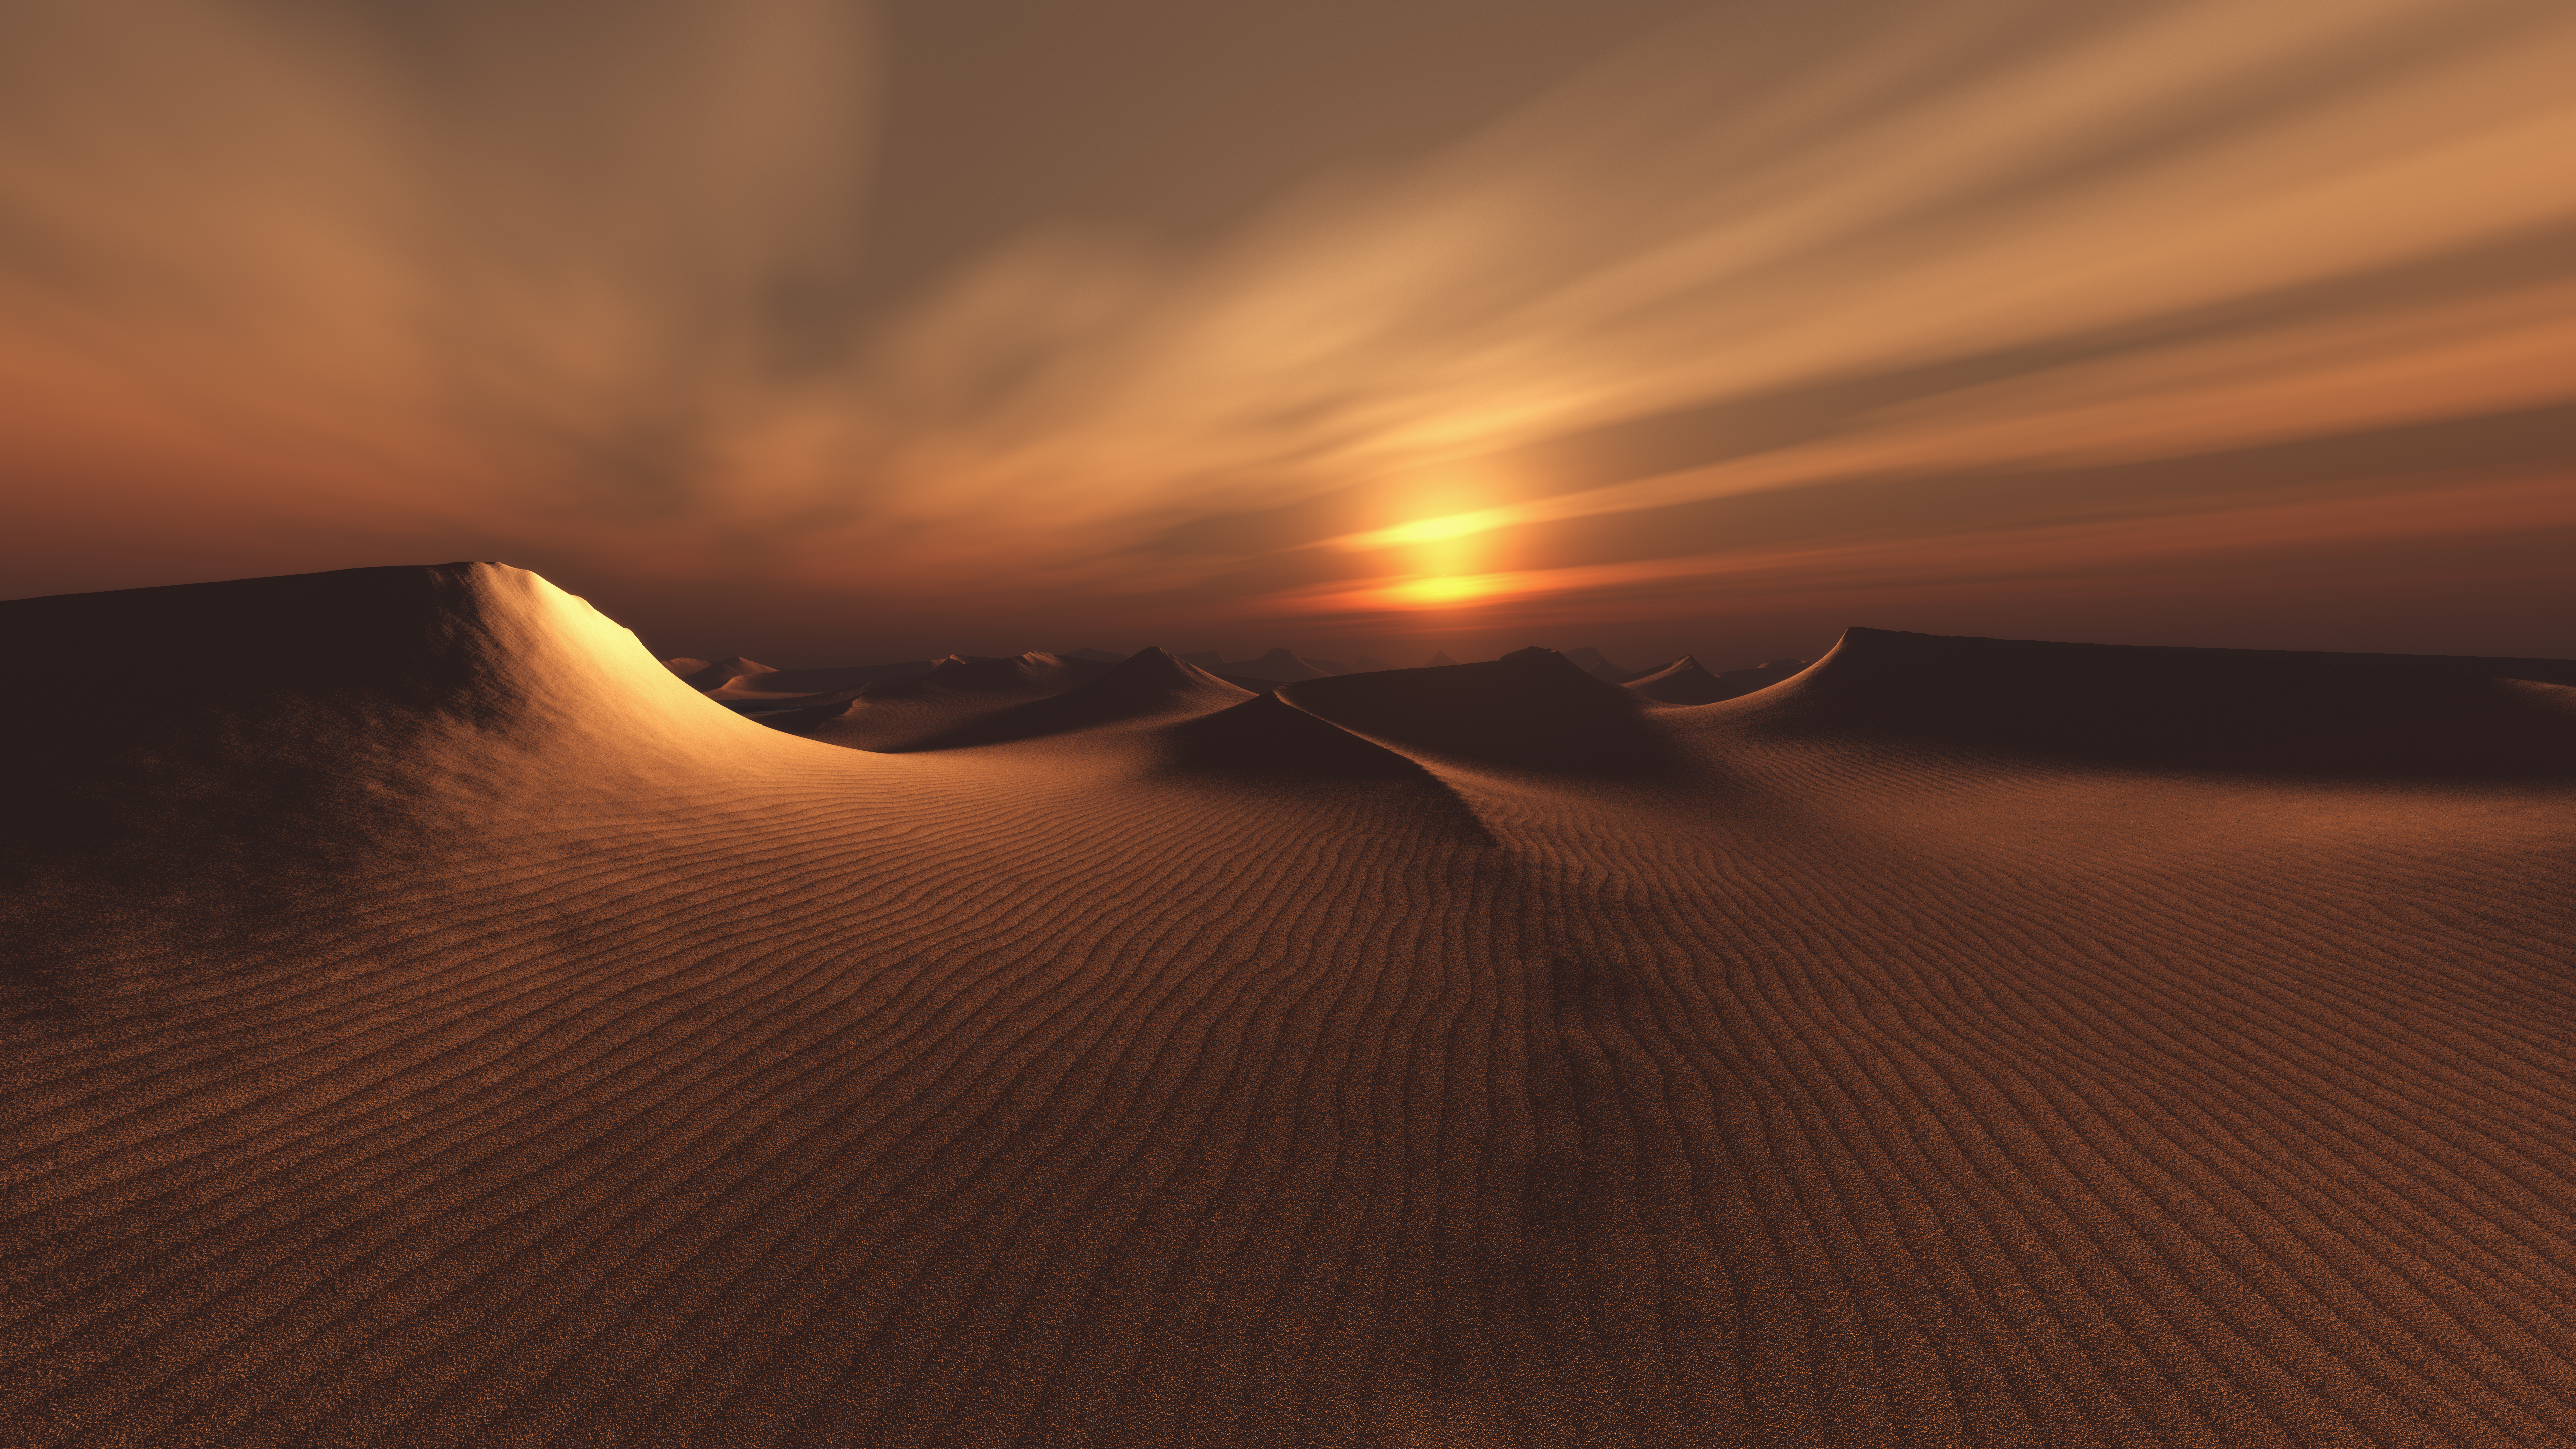 Desert Landscape Dunes Sand Sunset Sky Clouds Nature Sunlight Sunset Glow 5120x2880